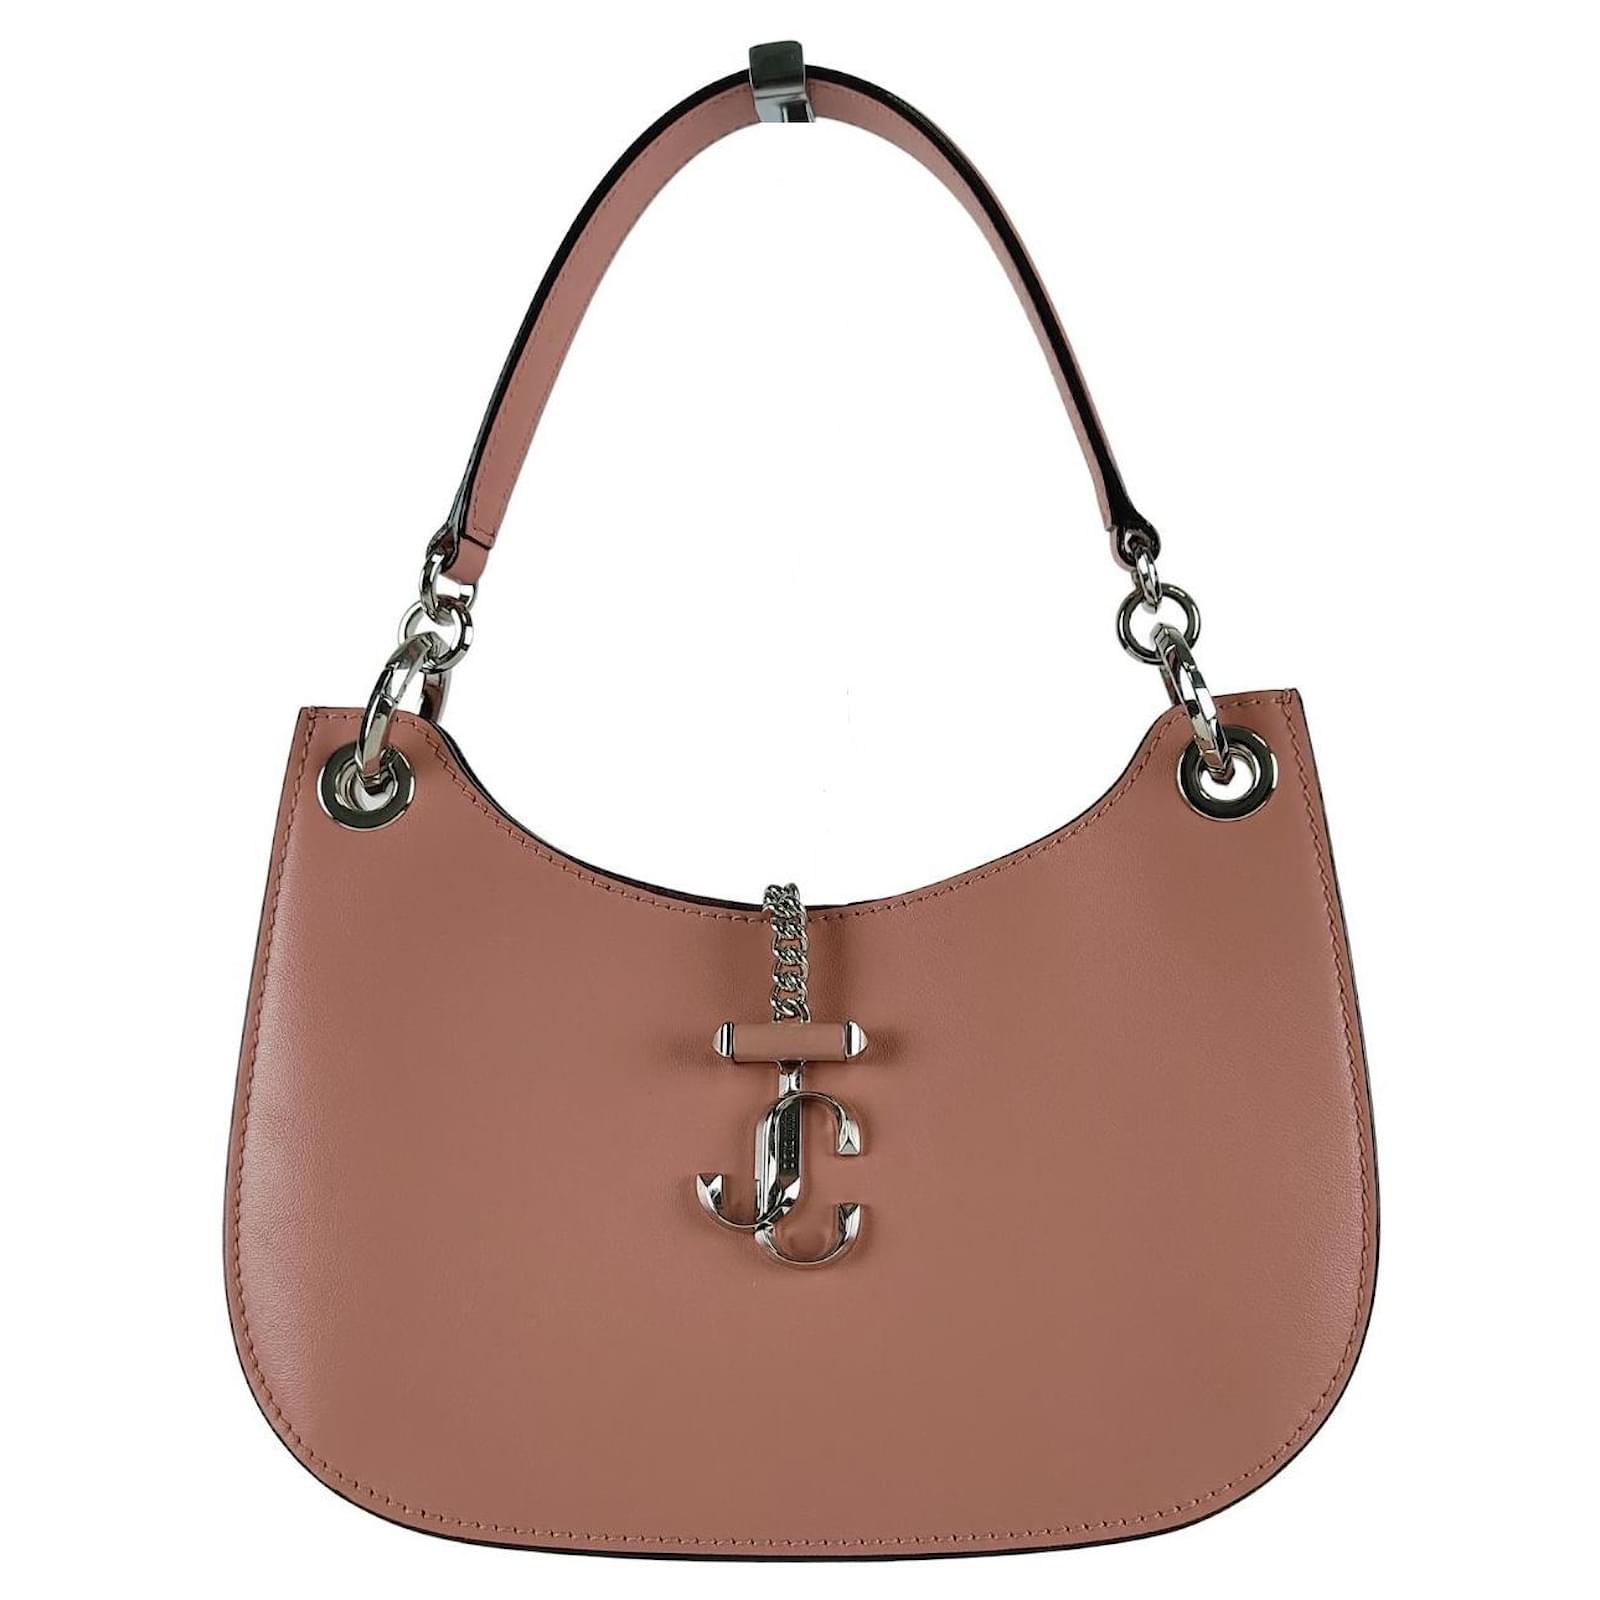 Jimmy Choo Large Rhea Red Leather Tote Handbag Purse Shopper Bag. | eBay